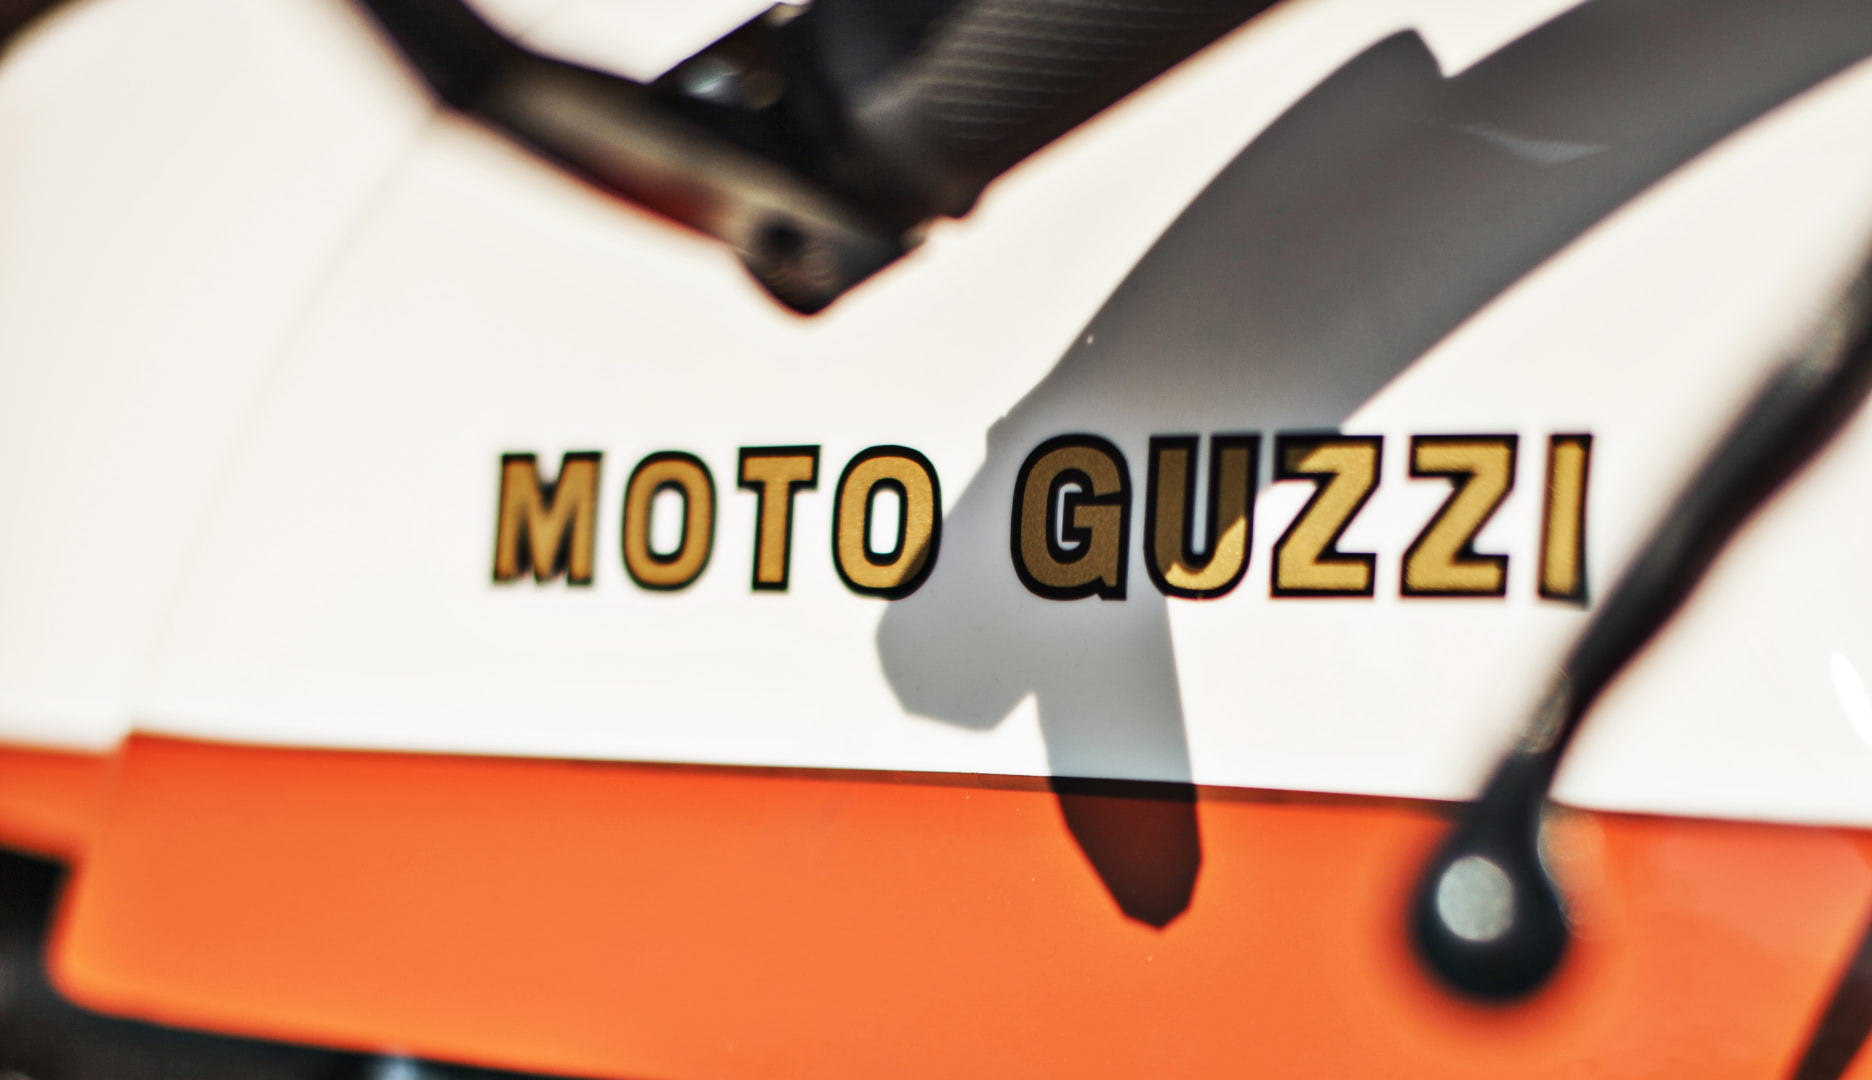 Moto Guzzi motorcycle logo